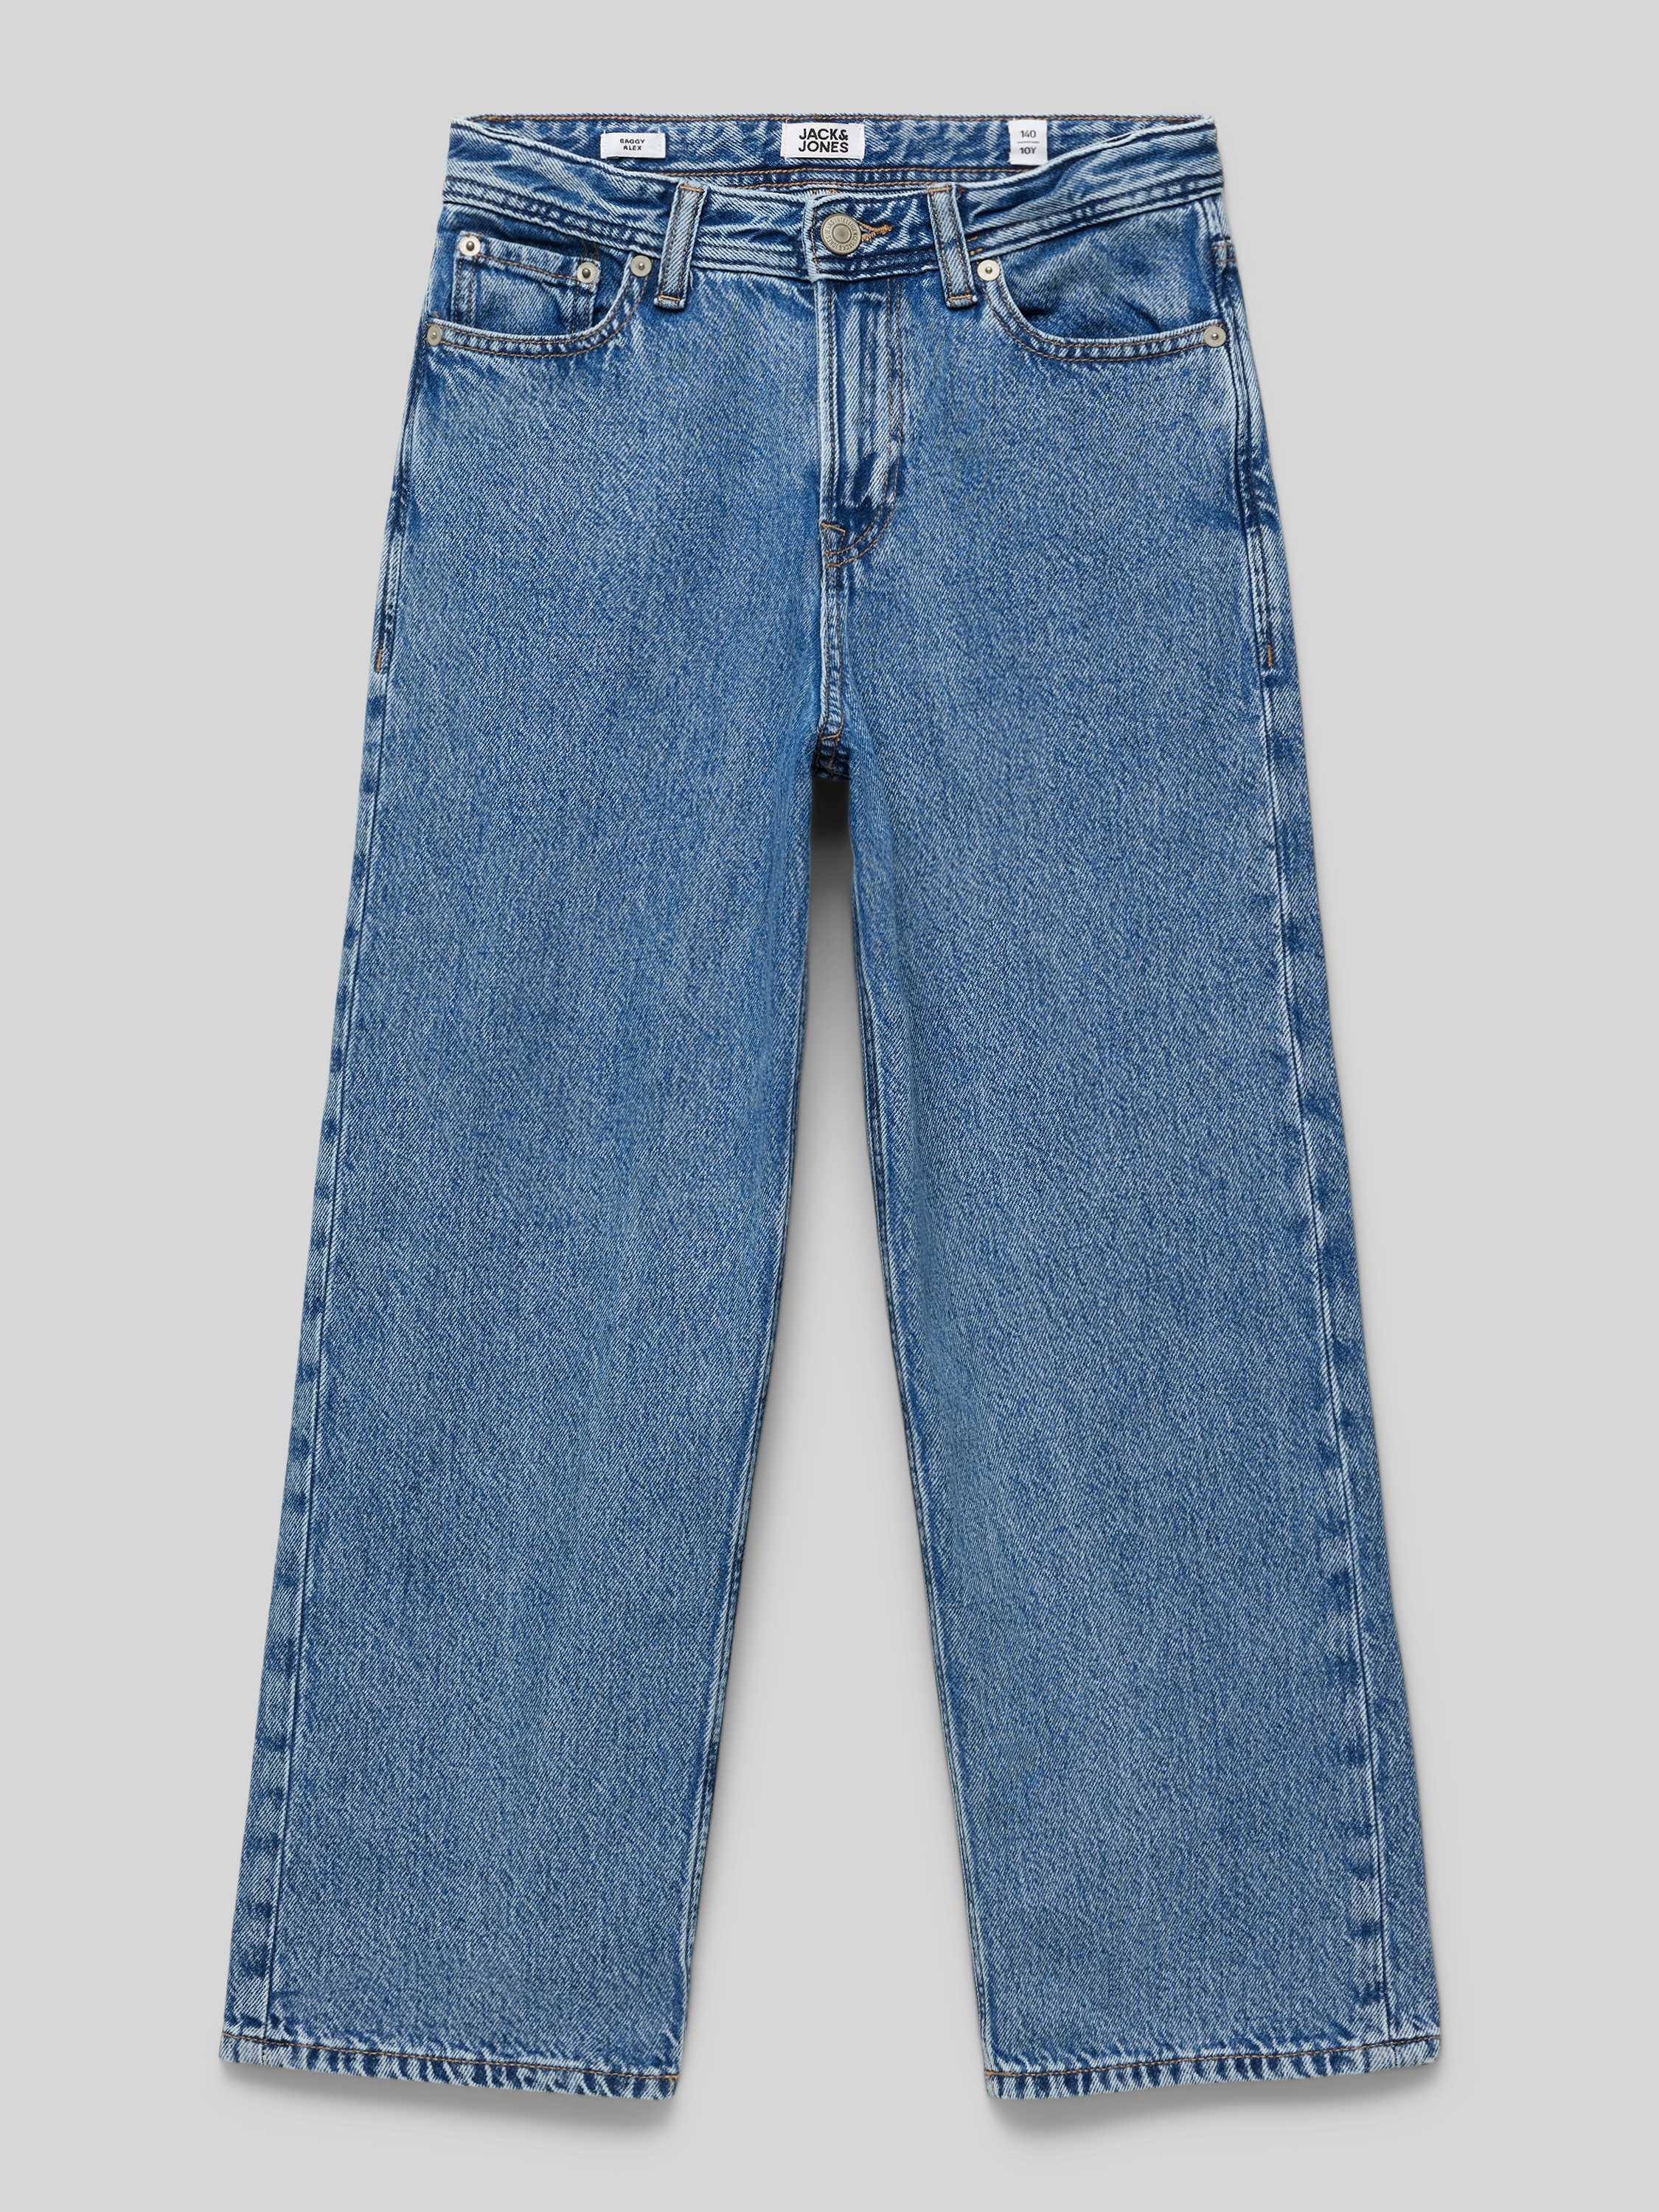 Jack & jones JUNIOR loose fit jeans JJIALEX JJORIGINAL blue denim Blauw 152